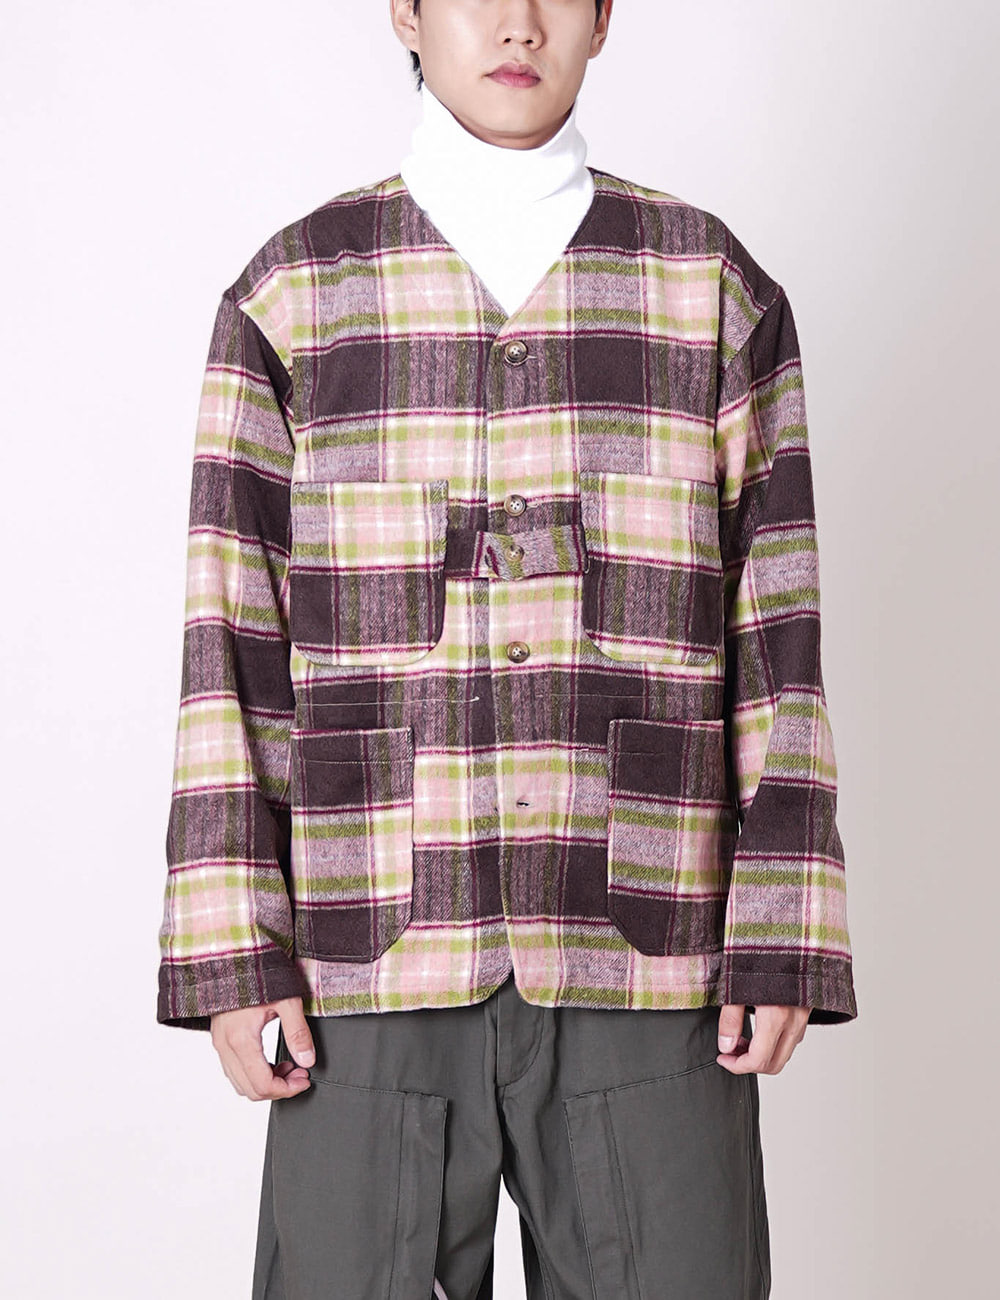 Cardigan Jacket (Brown/Pink Poly Wool Plaid)